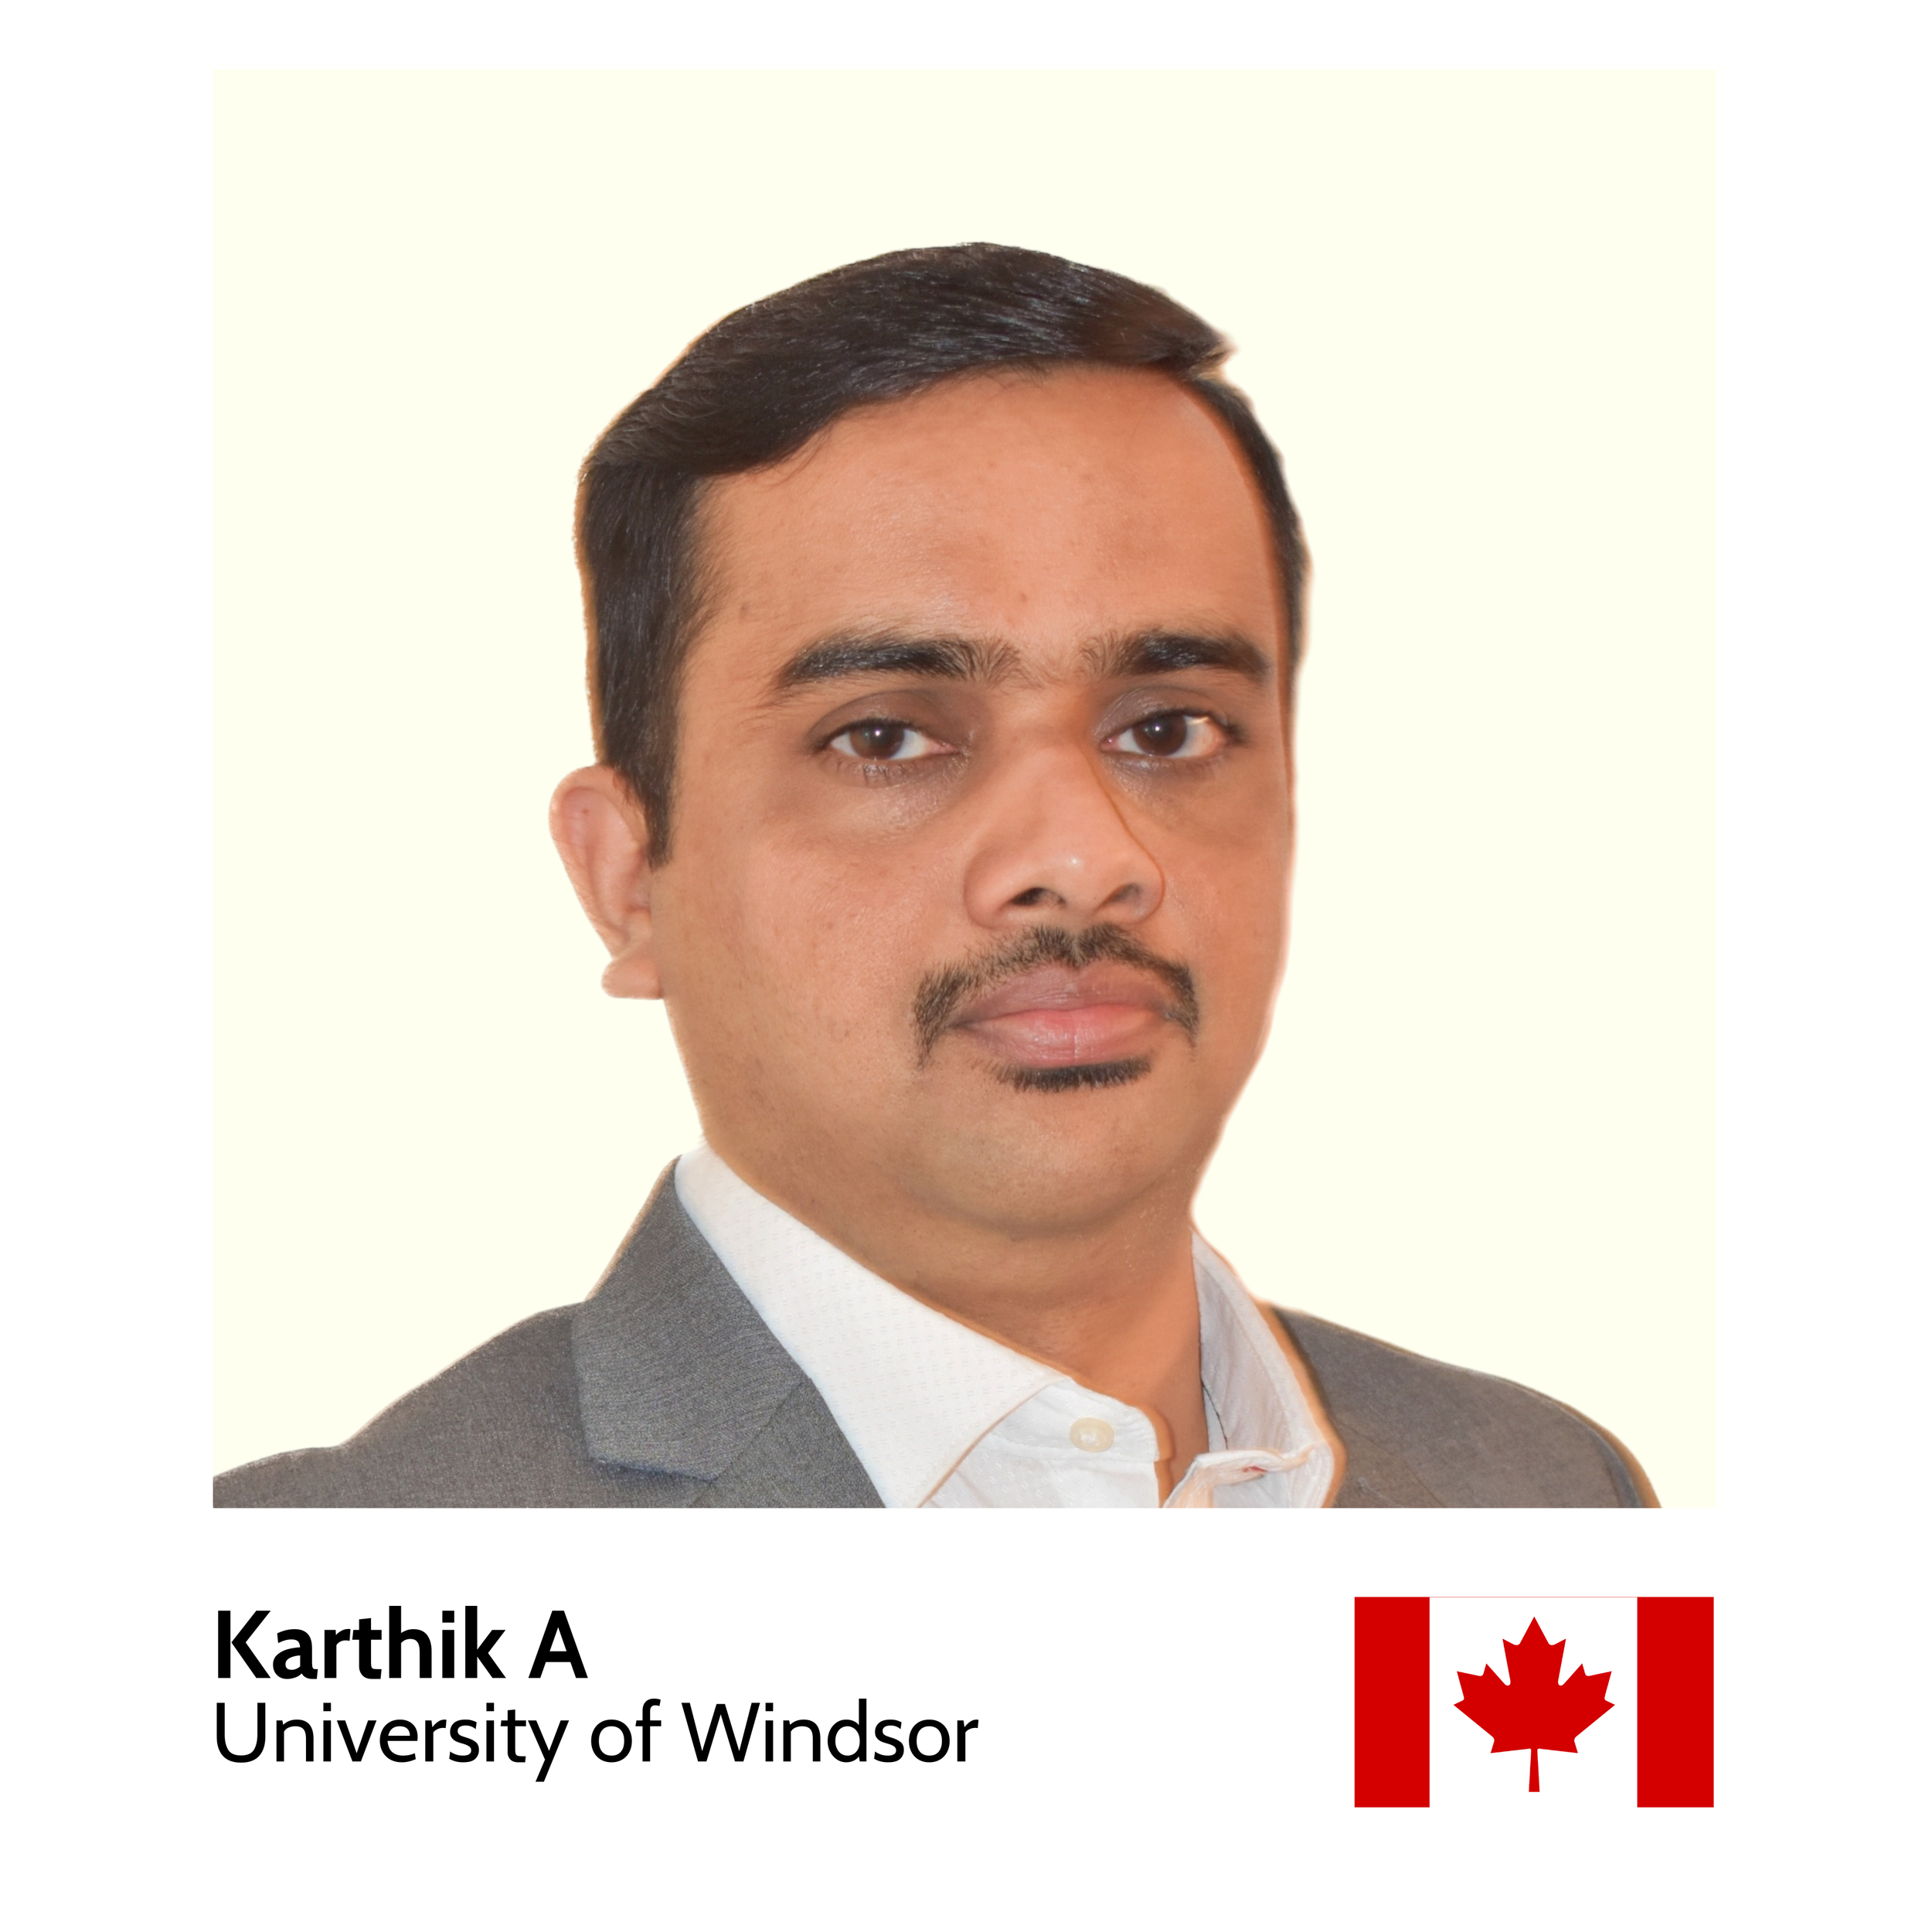 Your_Big_Year_ibm_zsystems_ambassador_Karthik_A_University_of_Windsor.png